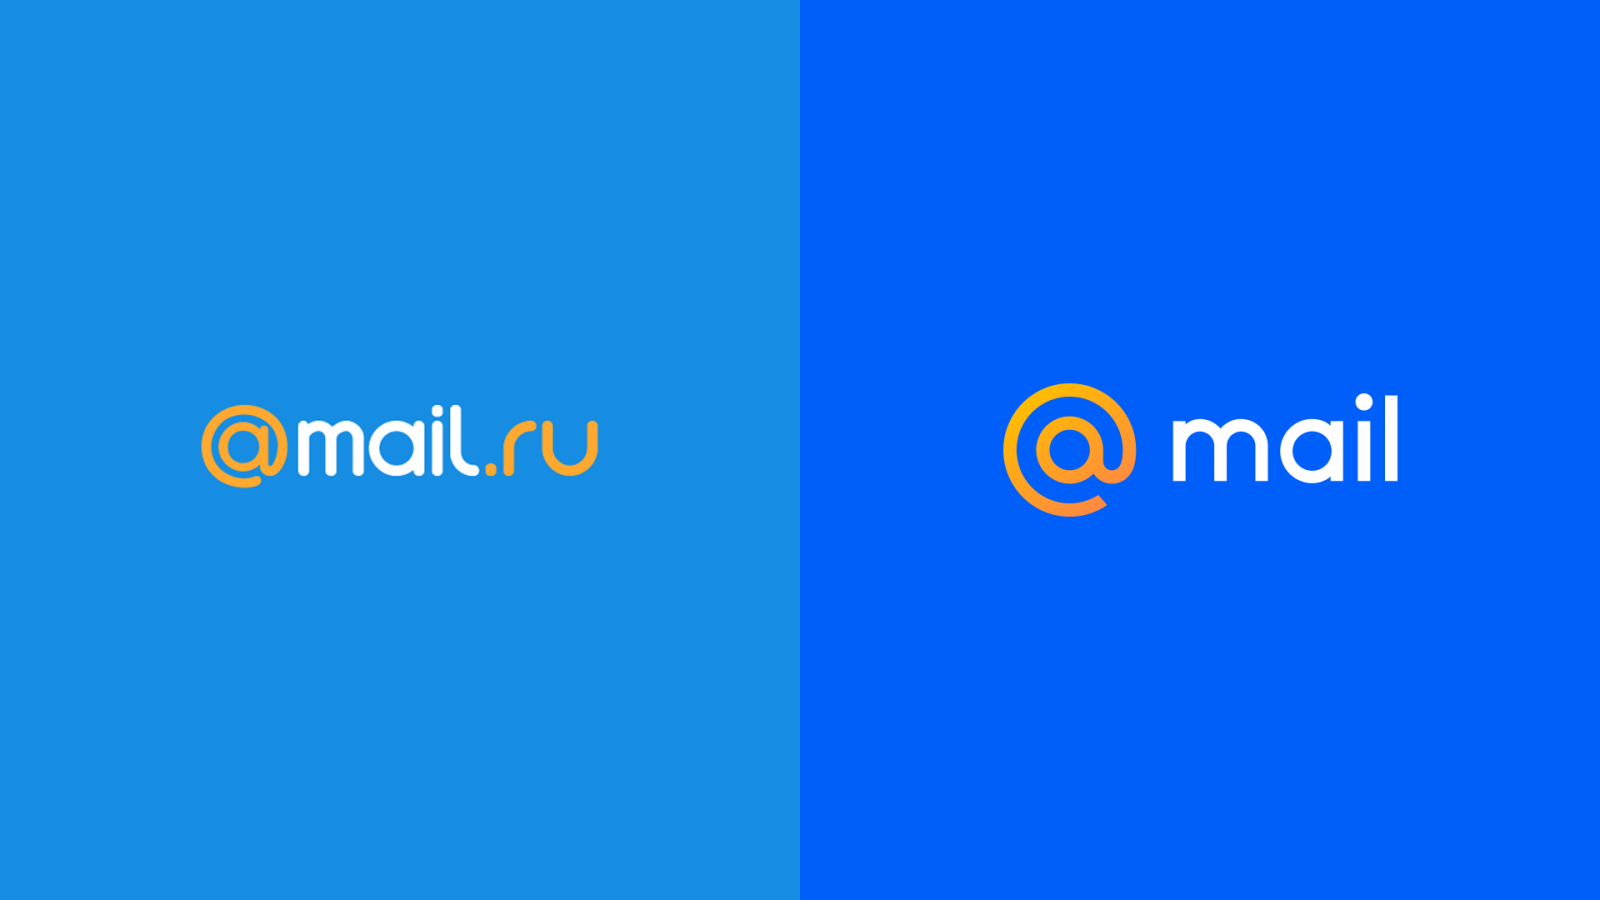 Долина mail ru. Mail. Почта майл. Mail.ru лого. Логотип почты мейл.